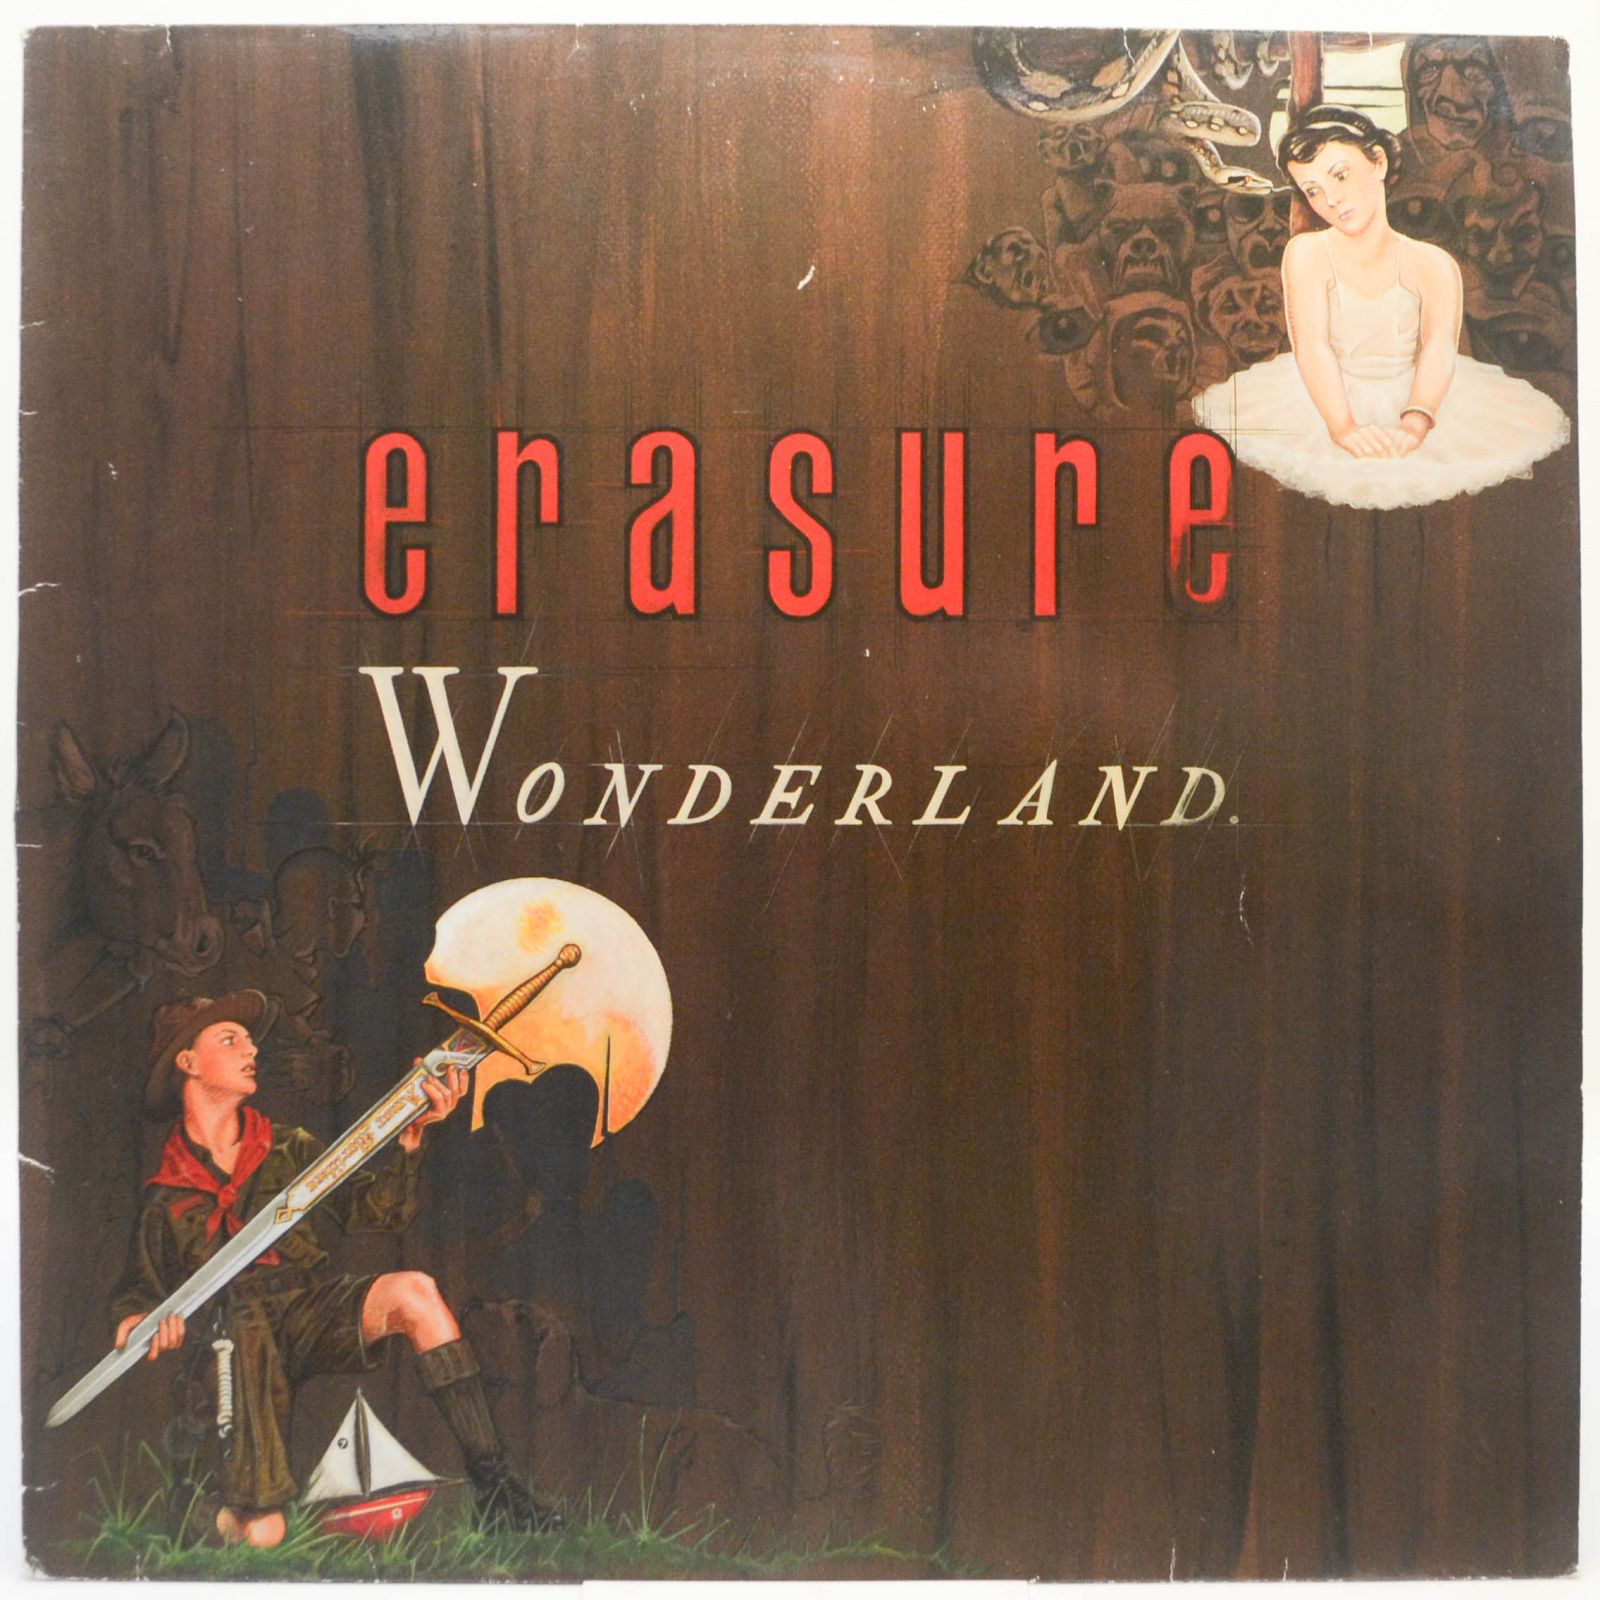 Erasure — Wonderland, 1986